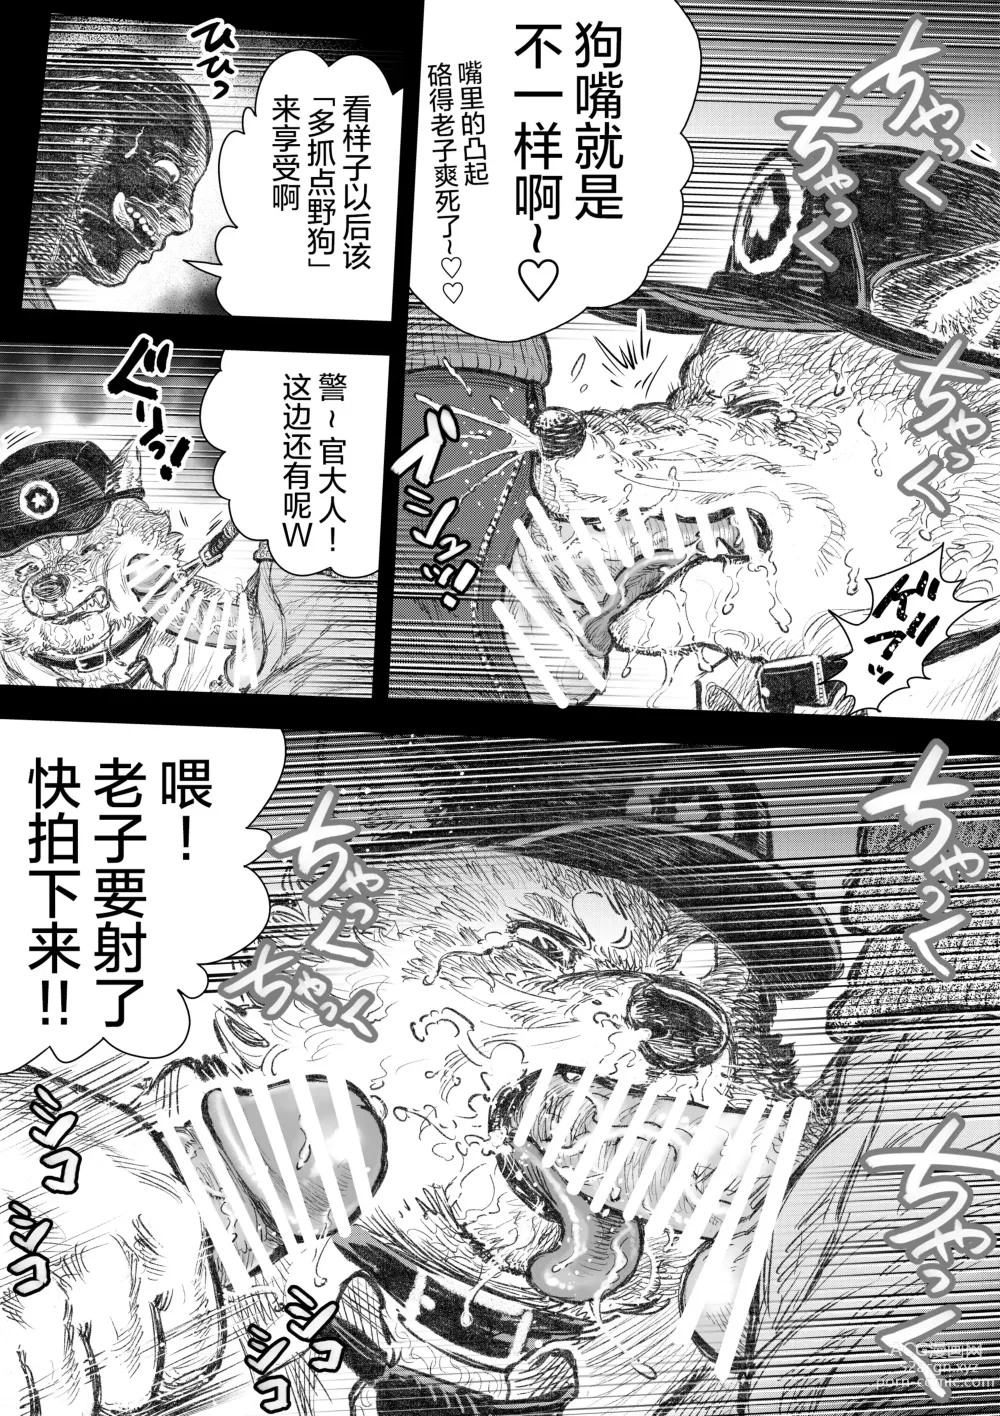 Page 6 of doujinshi 警犬巡查队队长②